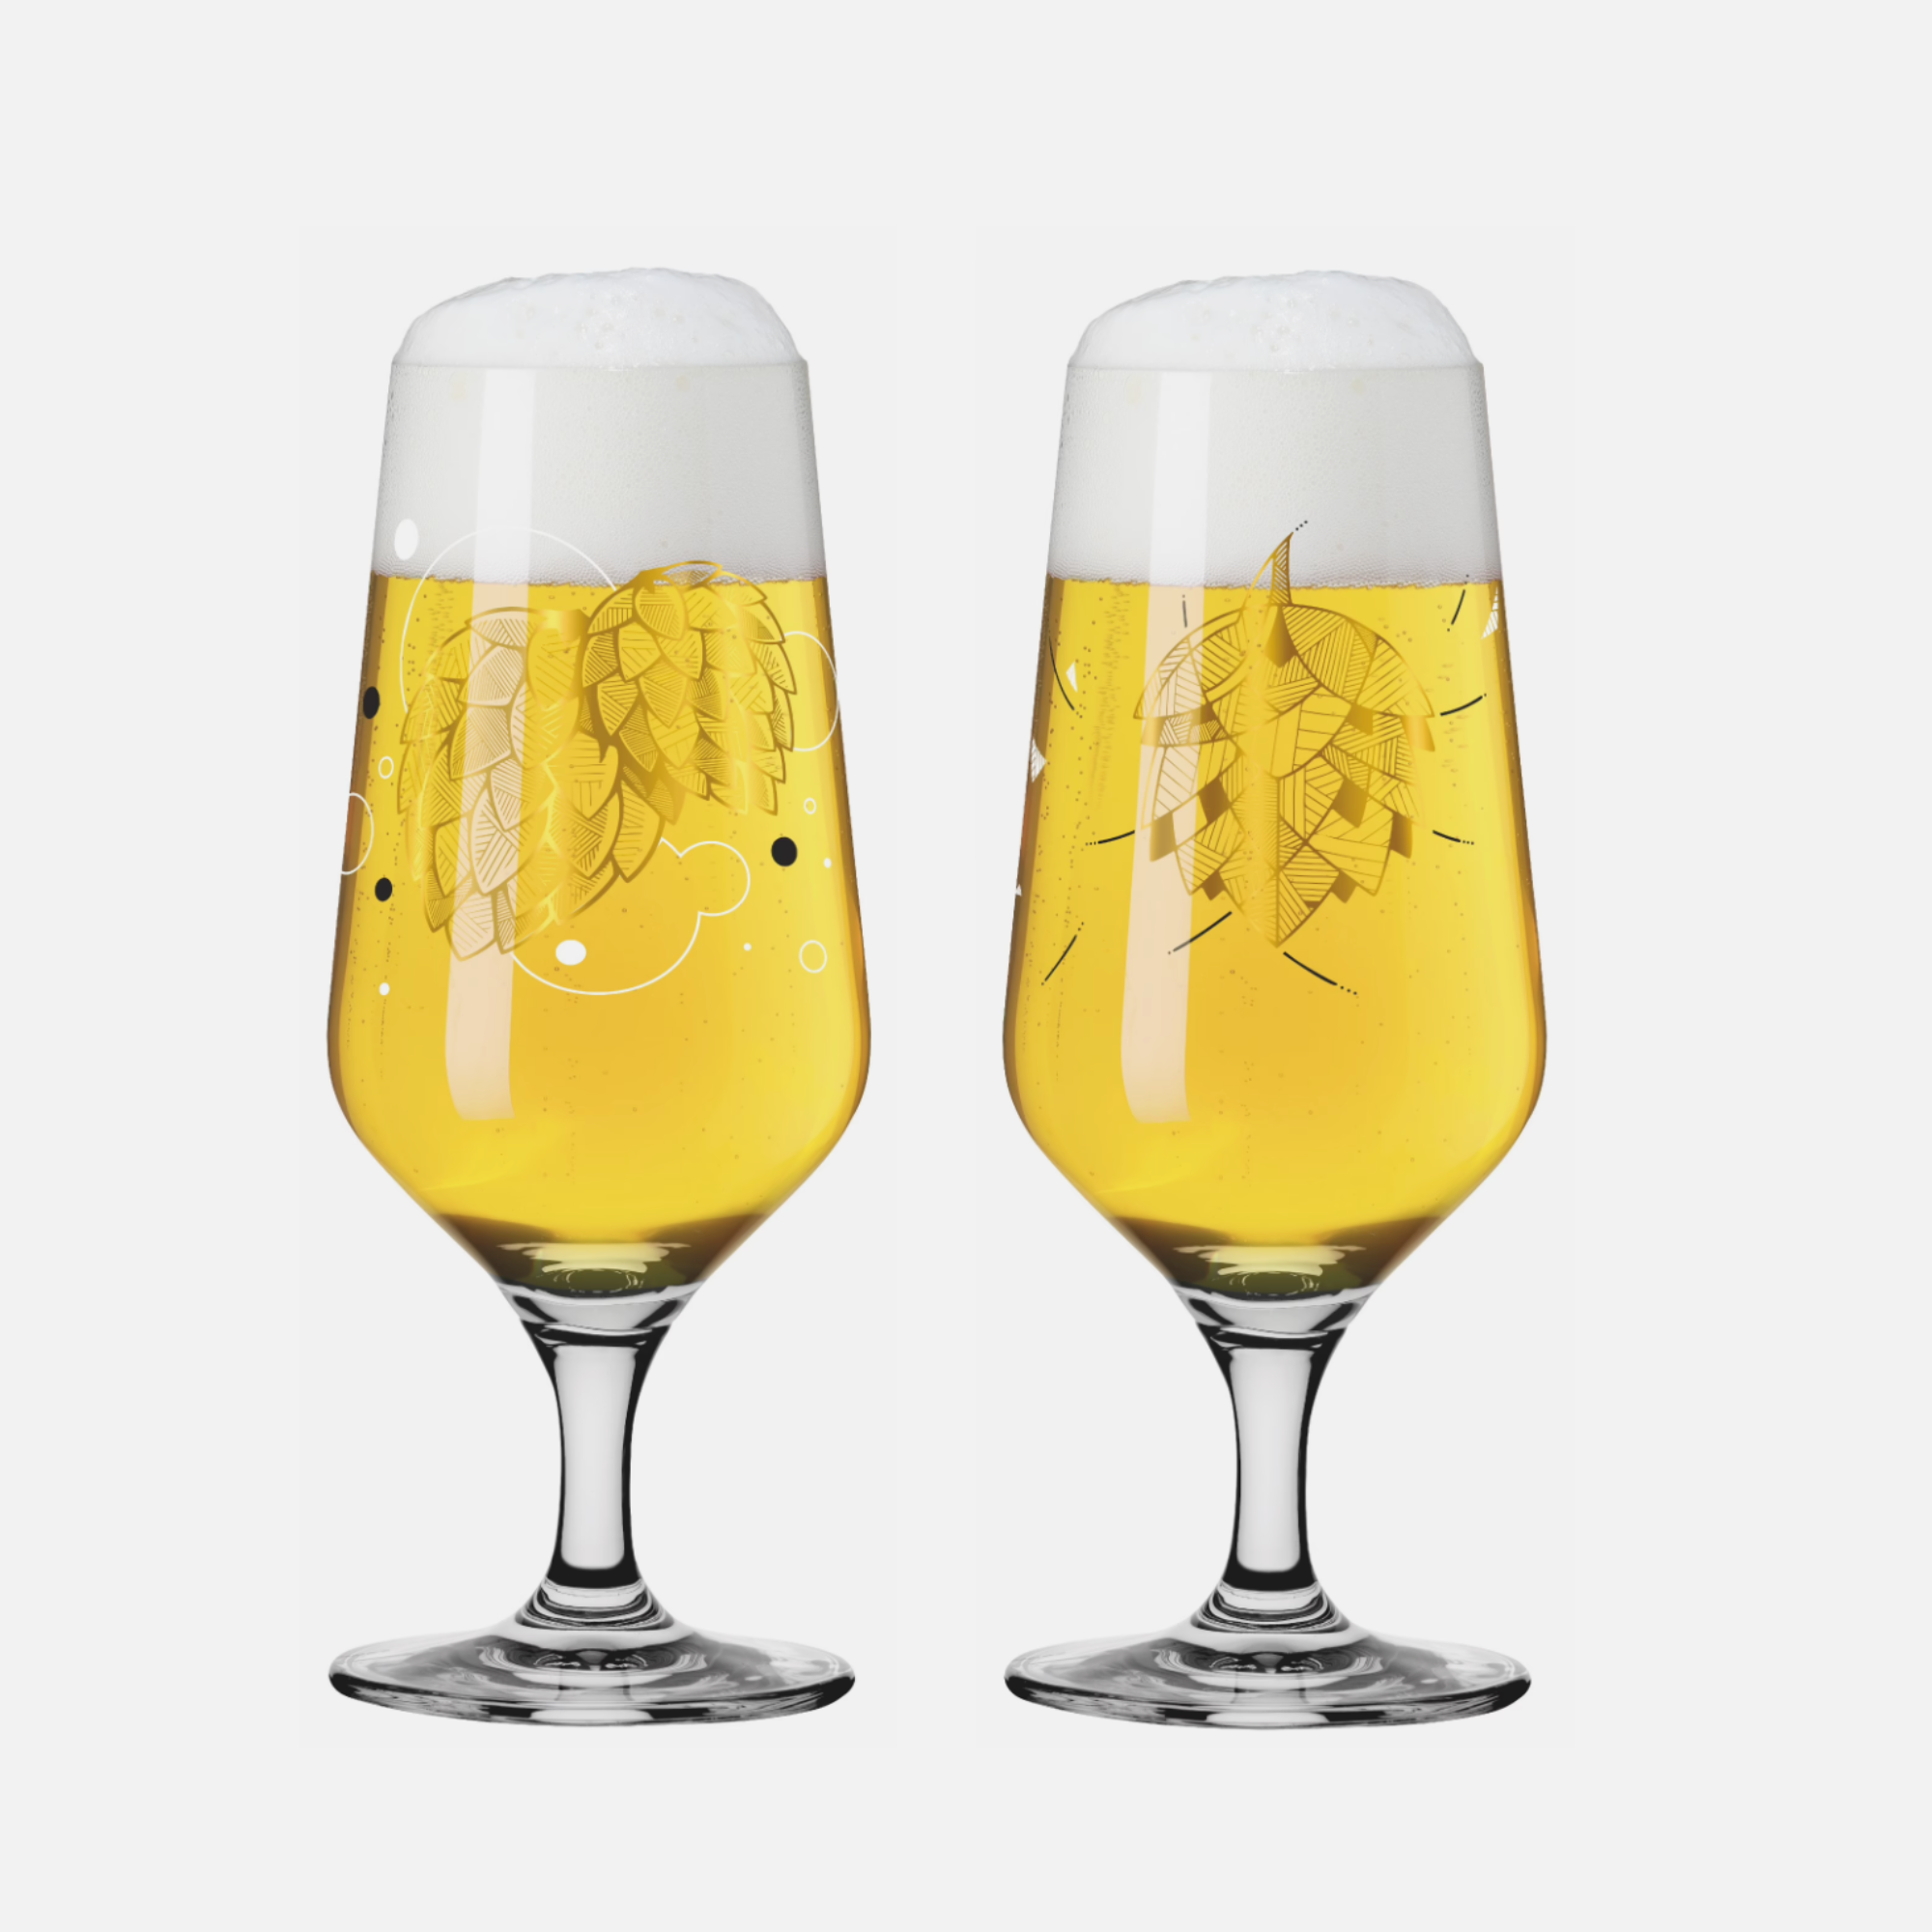 Brauchzeit Pilsner Beer Glass Set #1